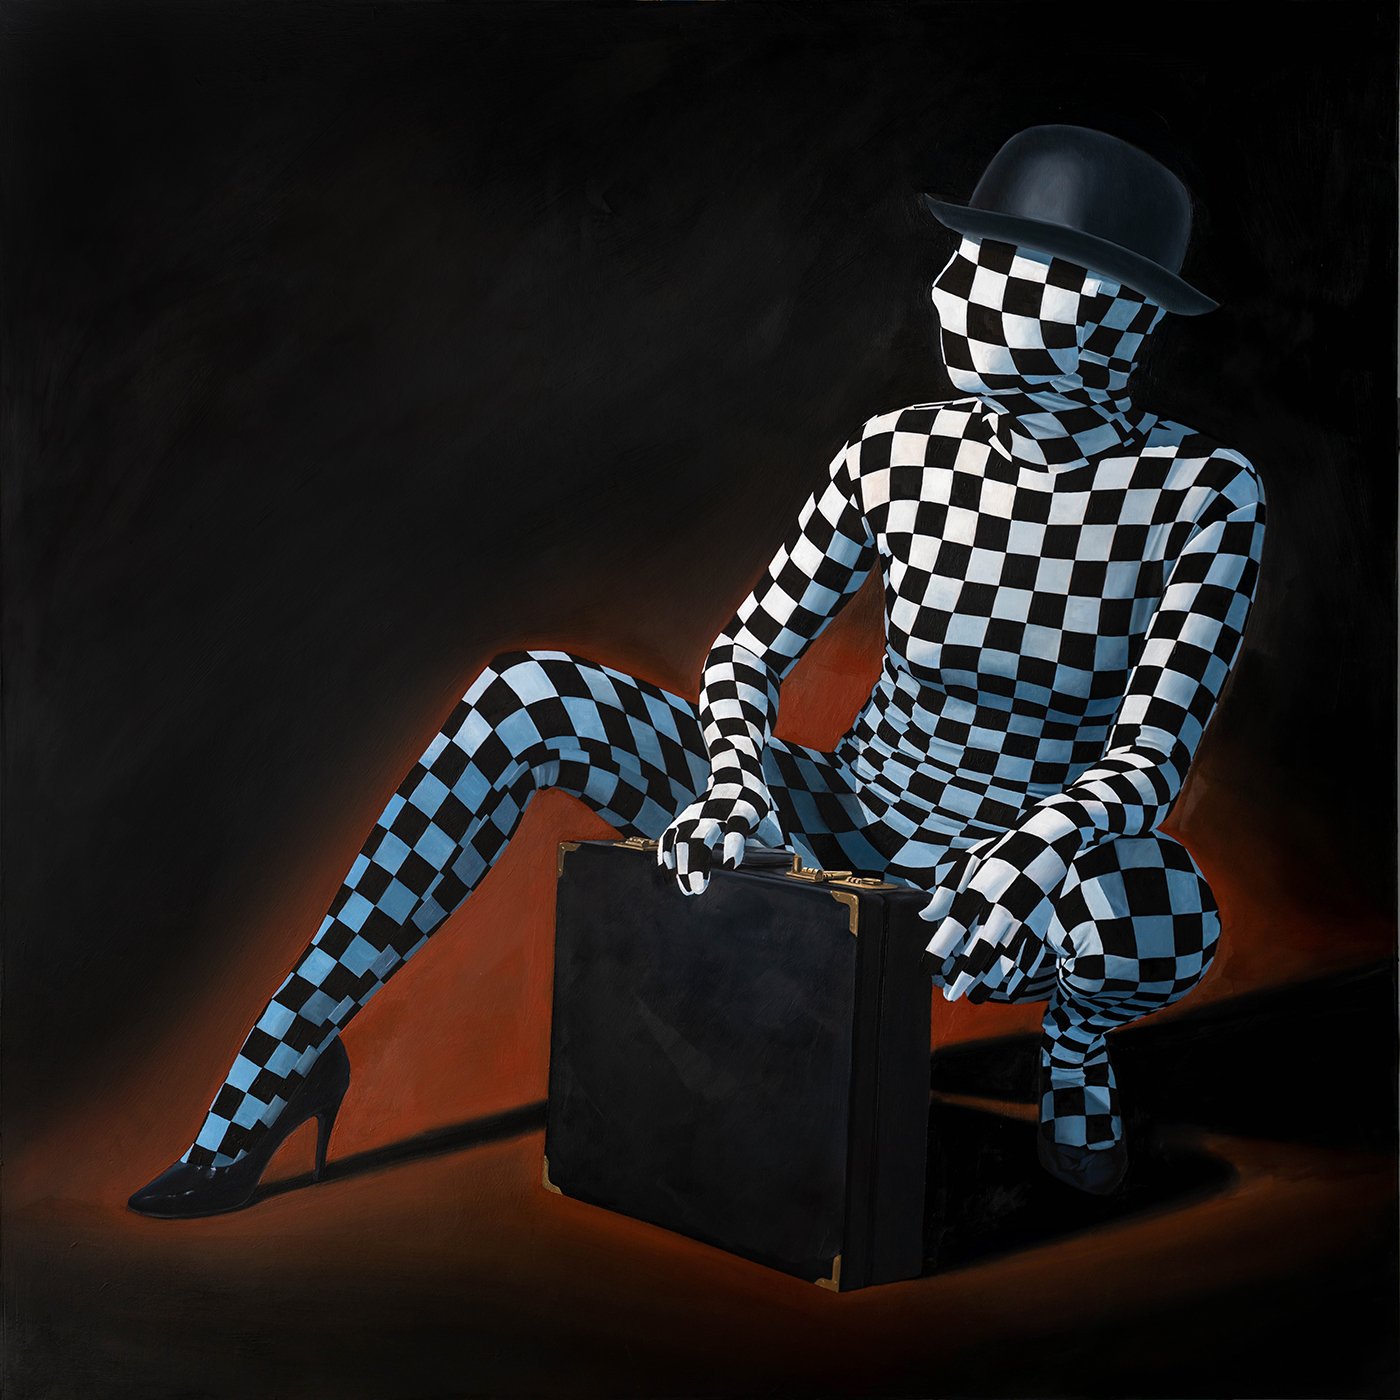 William higginson surrealism oil painting checker girl 2 web res.jpg